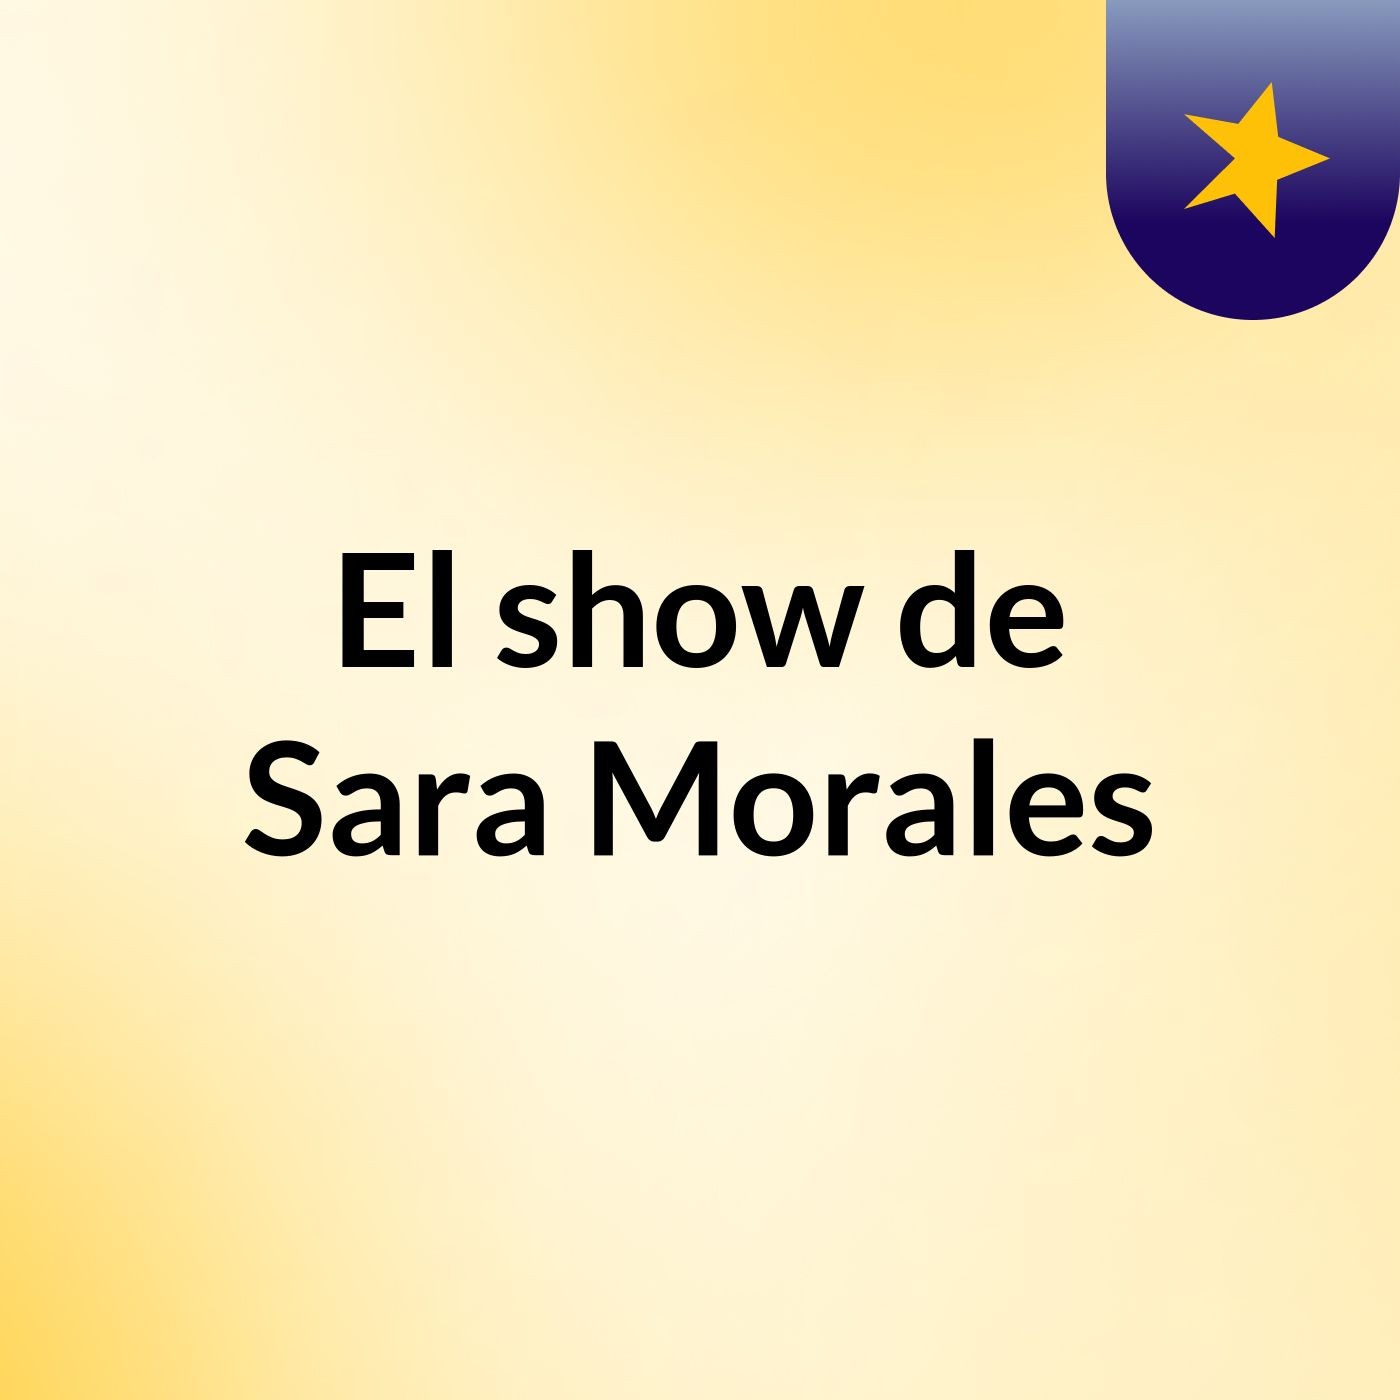 El show de Sara Morales